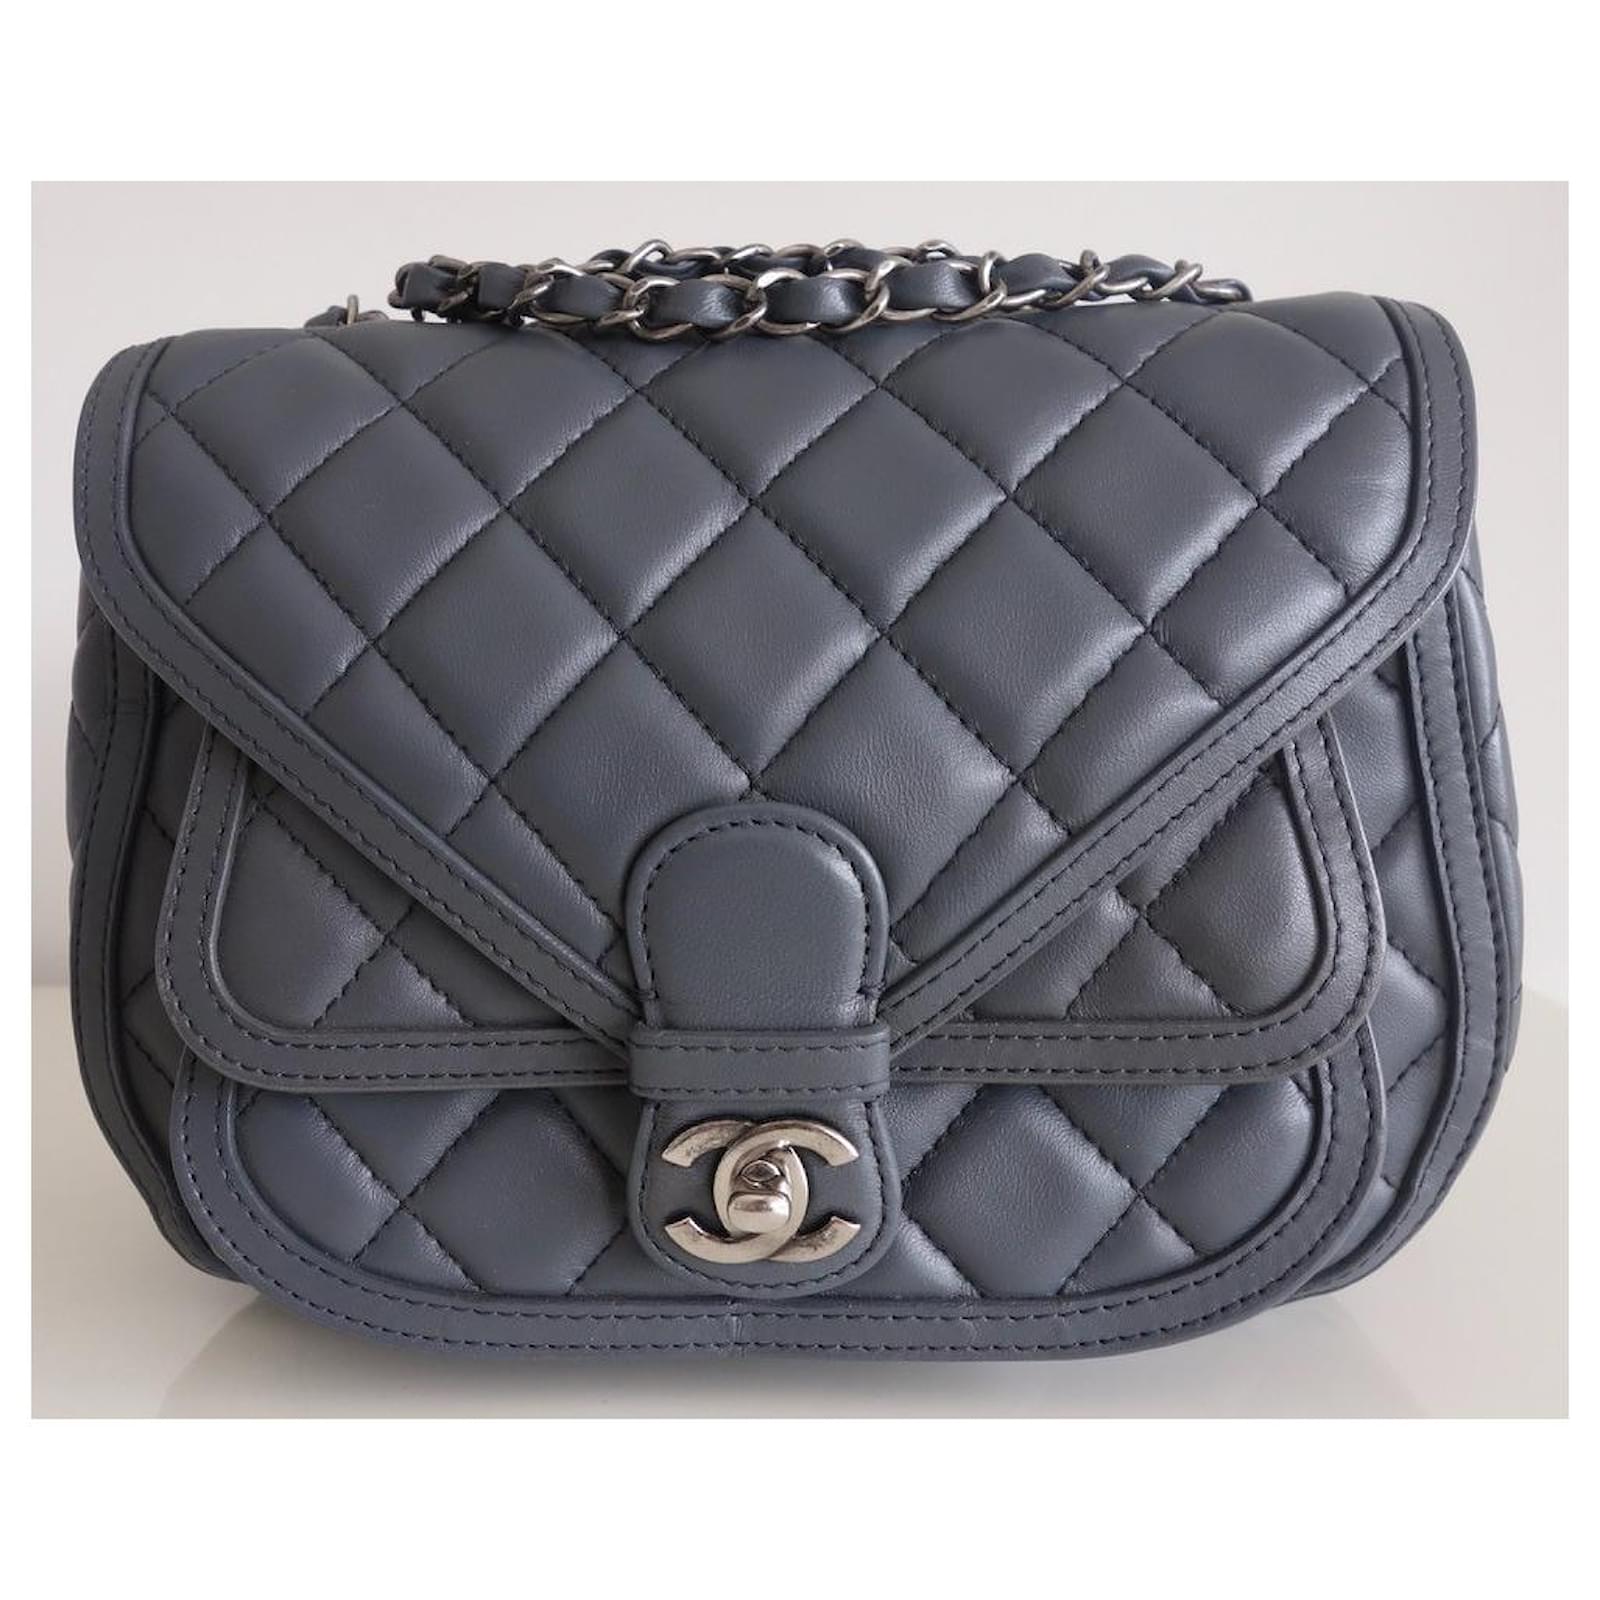 Handbags Chanel Chanel Classic Gray Leather Bag